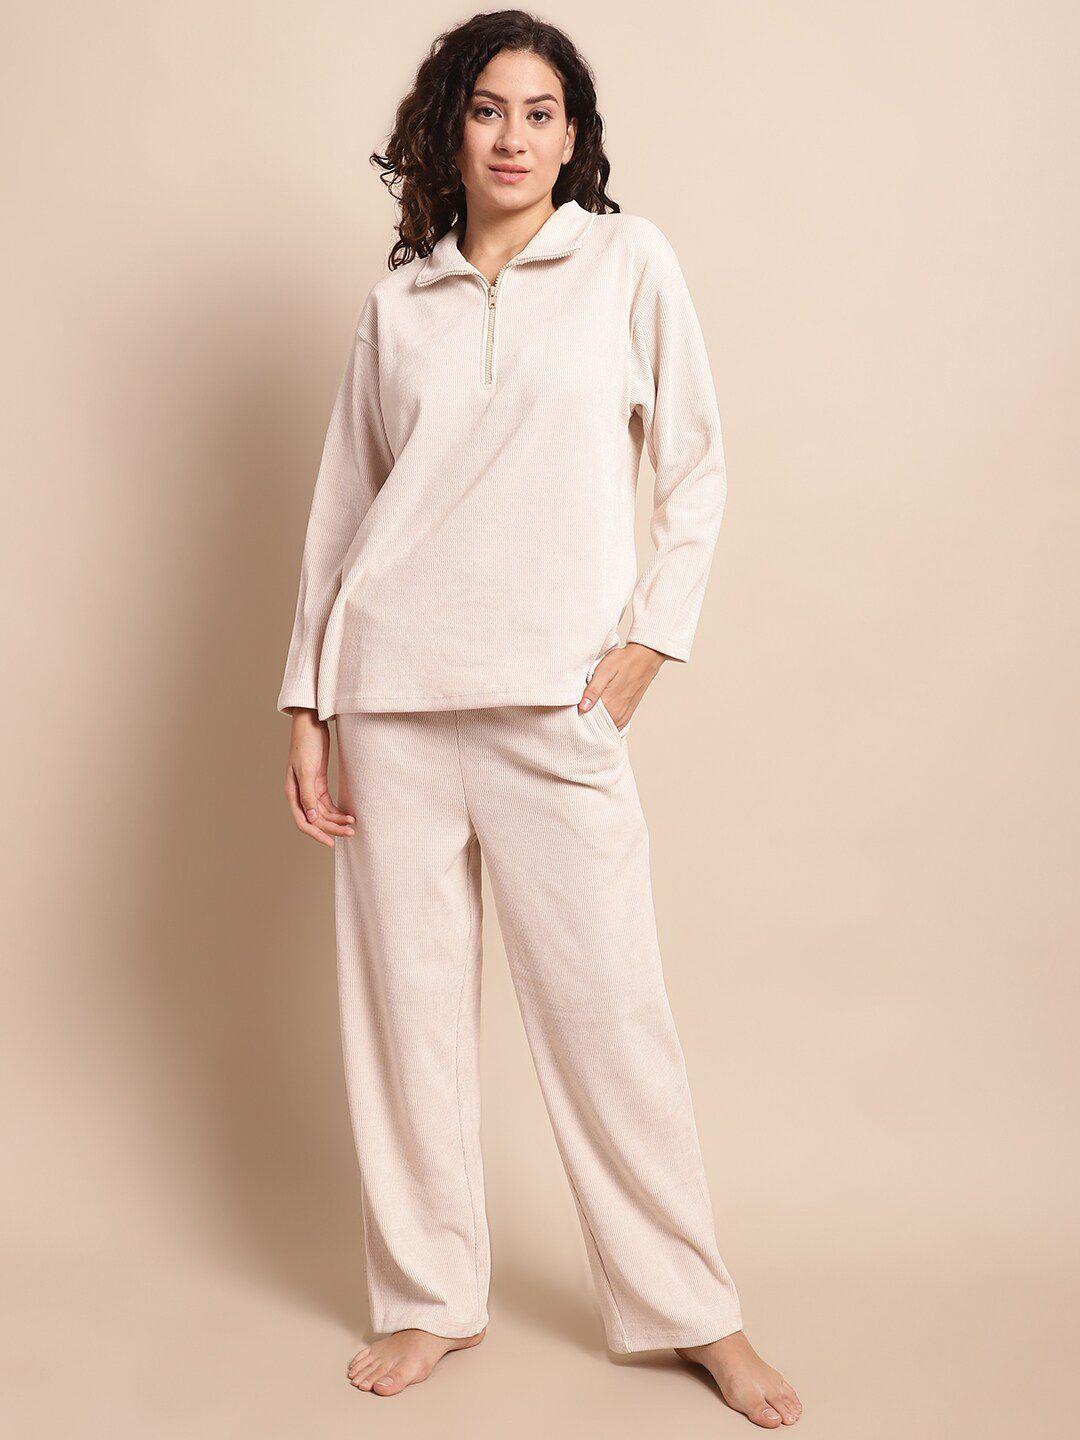 kanvin velvet t-shirt and pyjama night suit